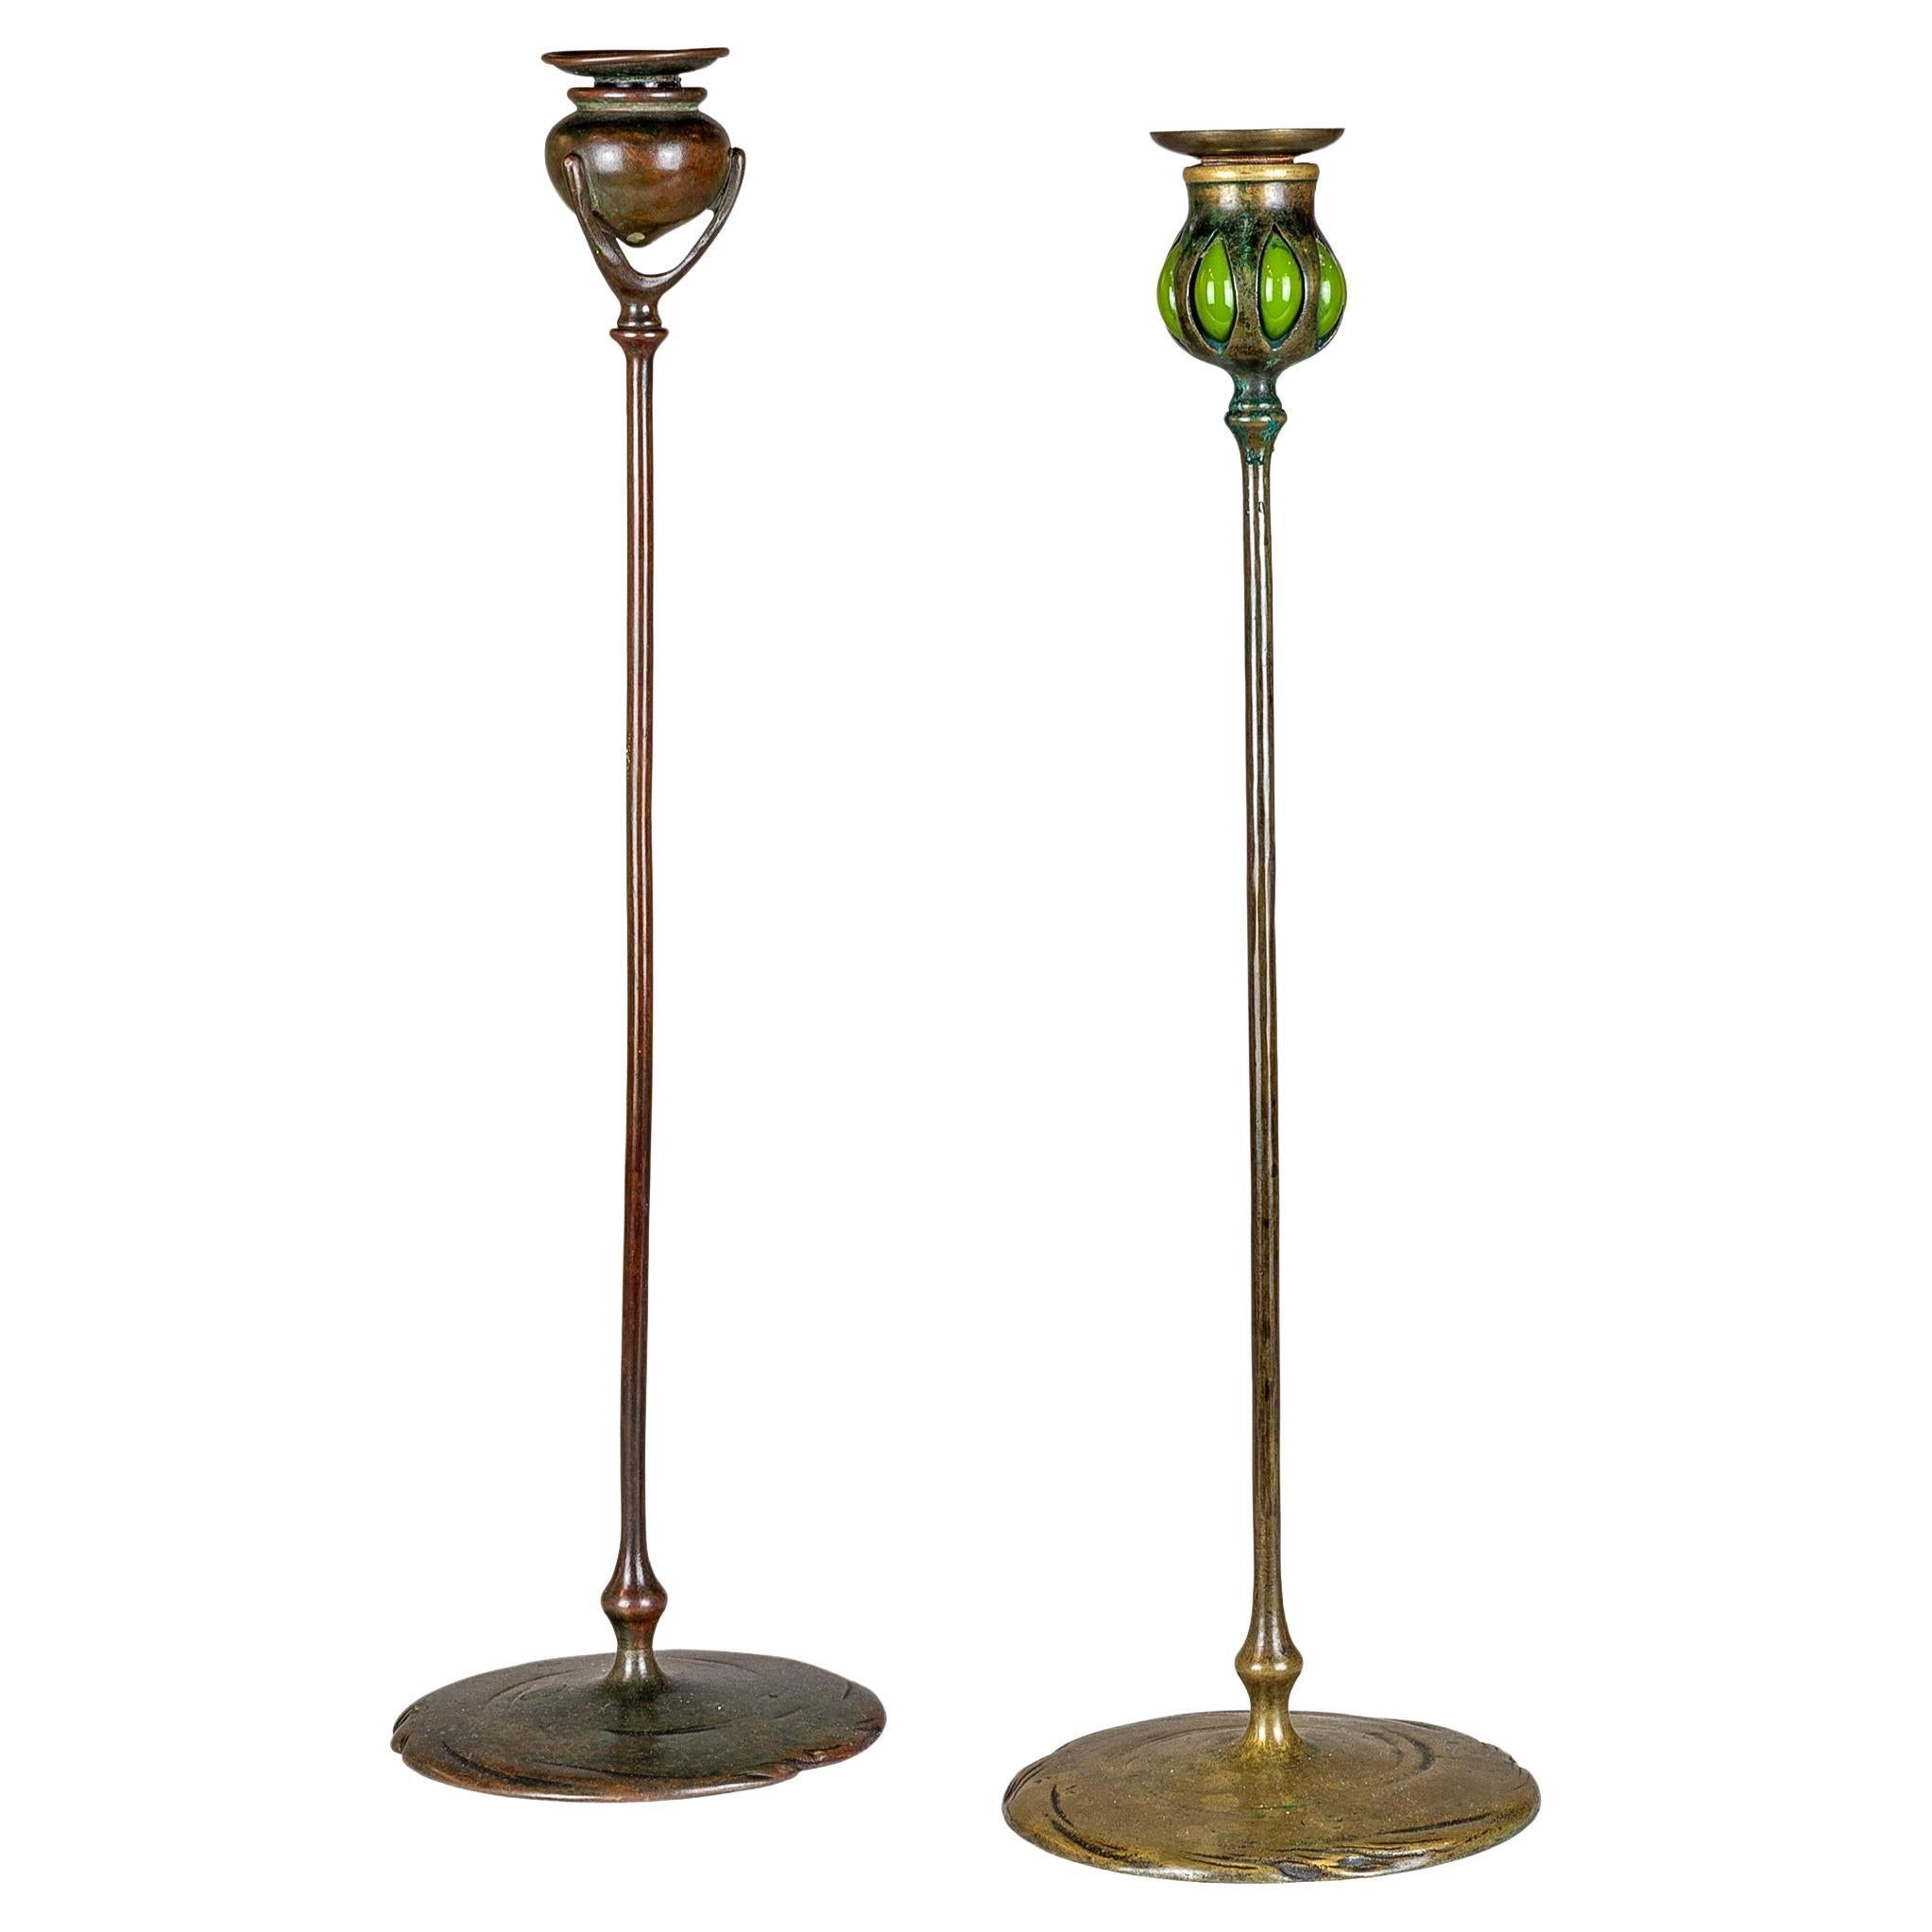  Art Nouveau Tiffany Patinated-Bronze Candlesticks